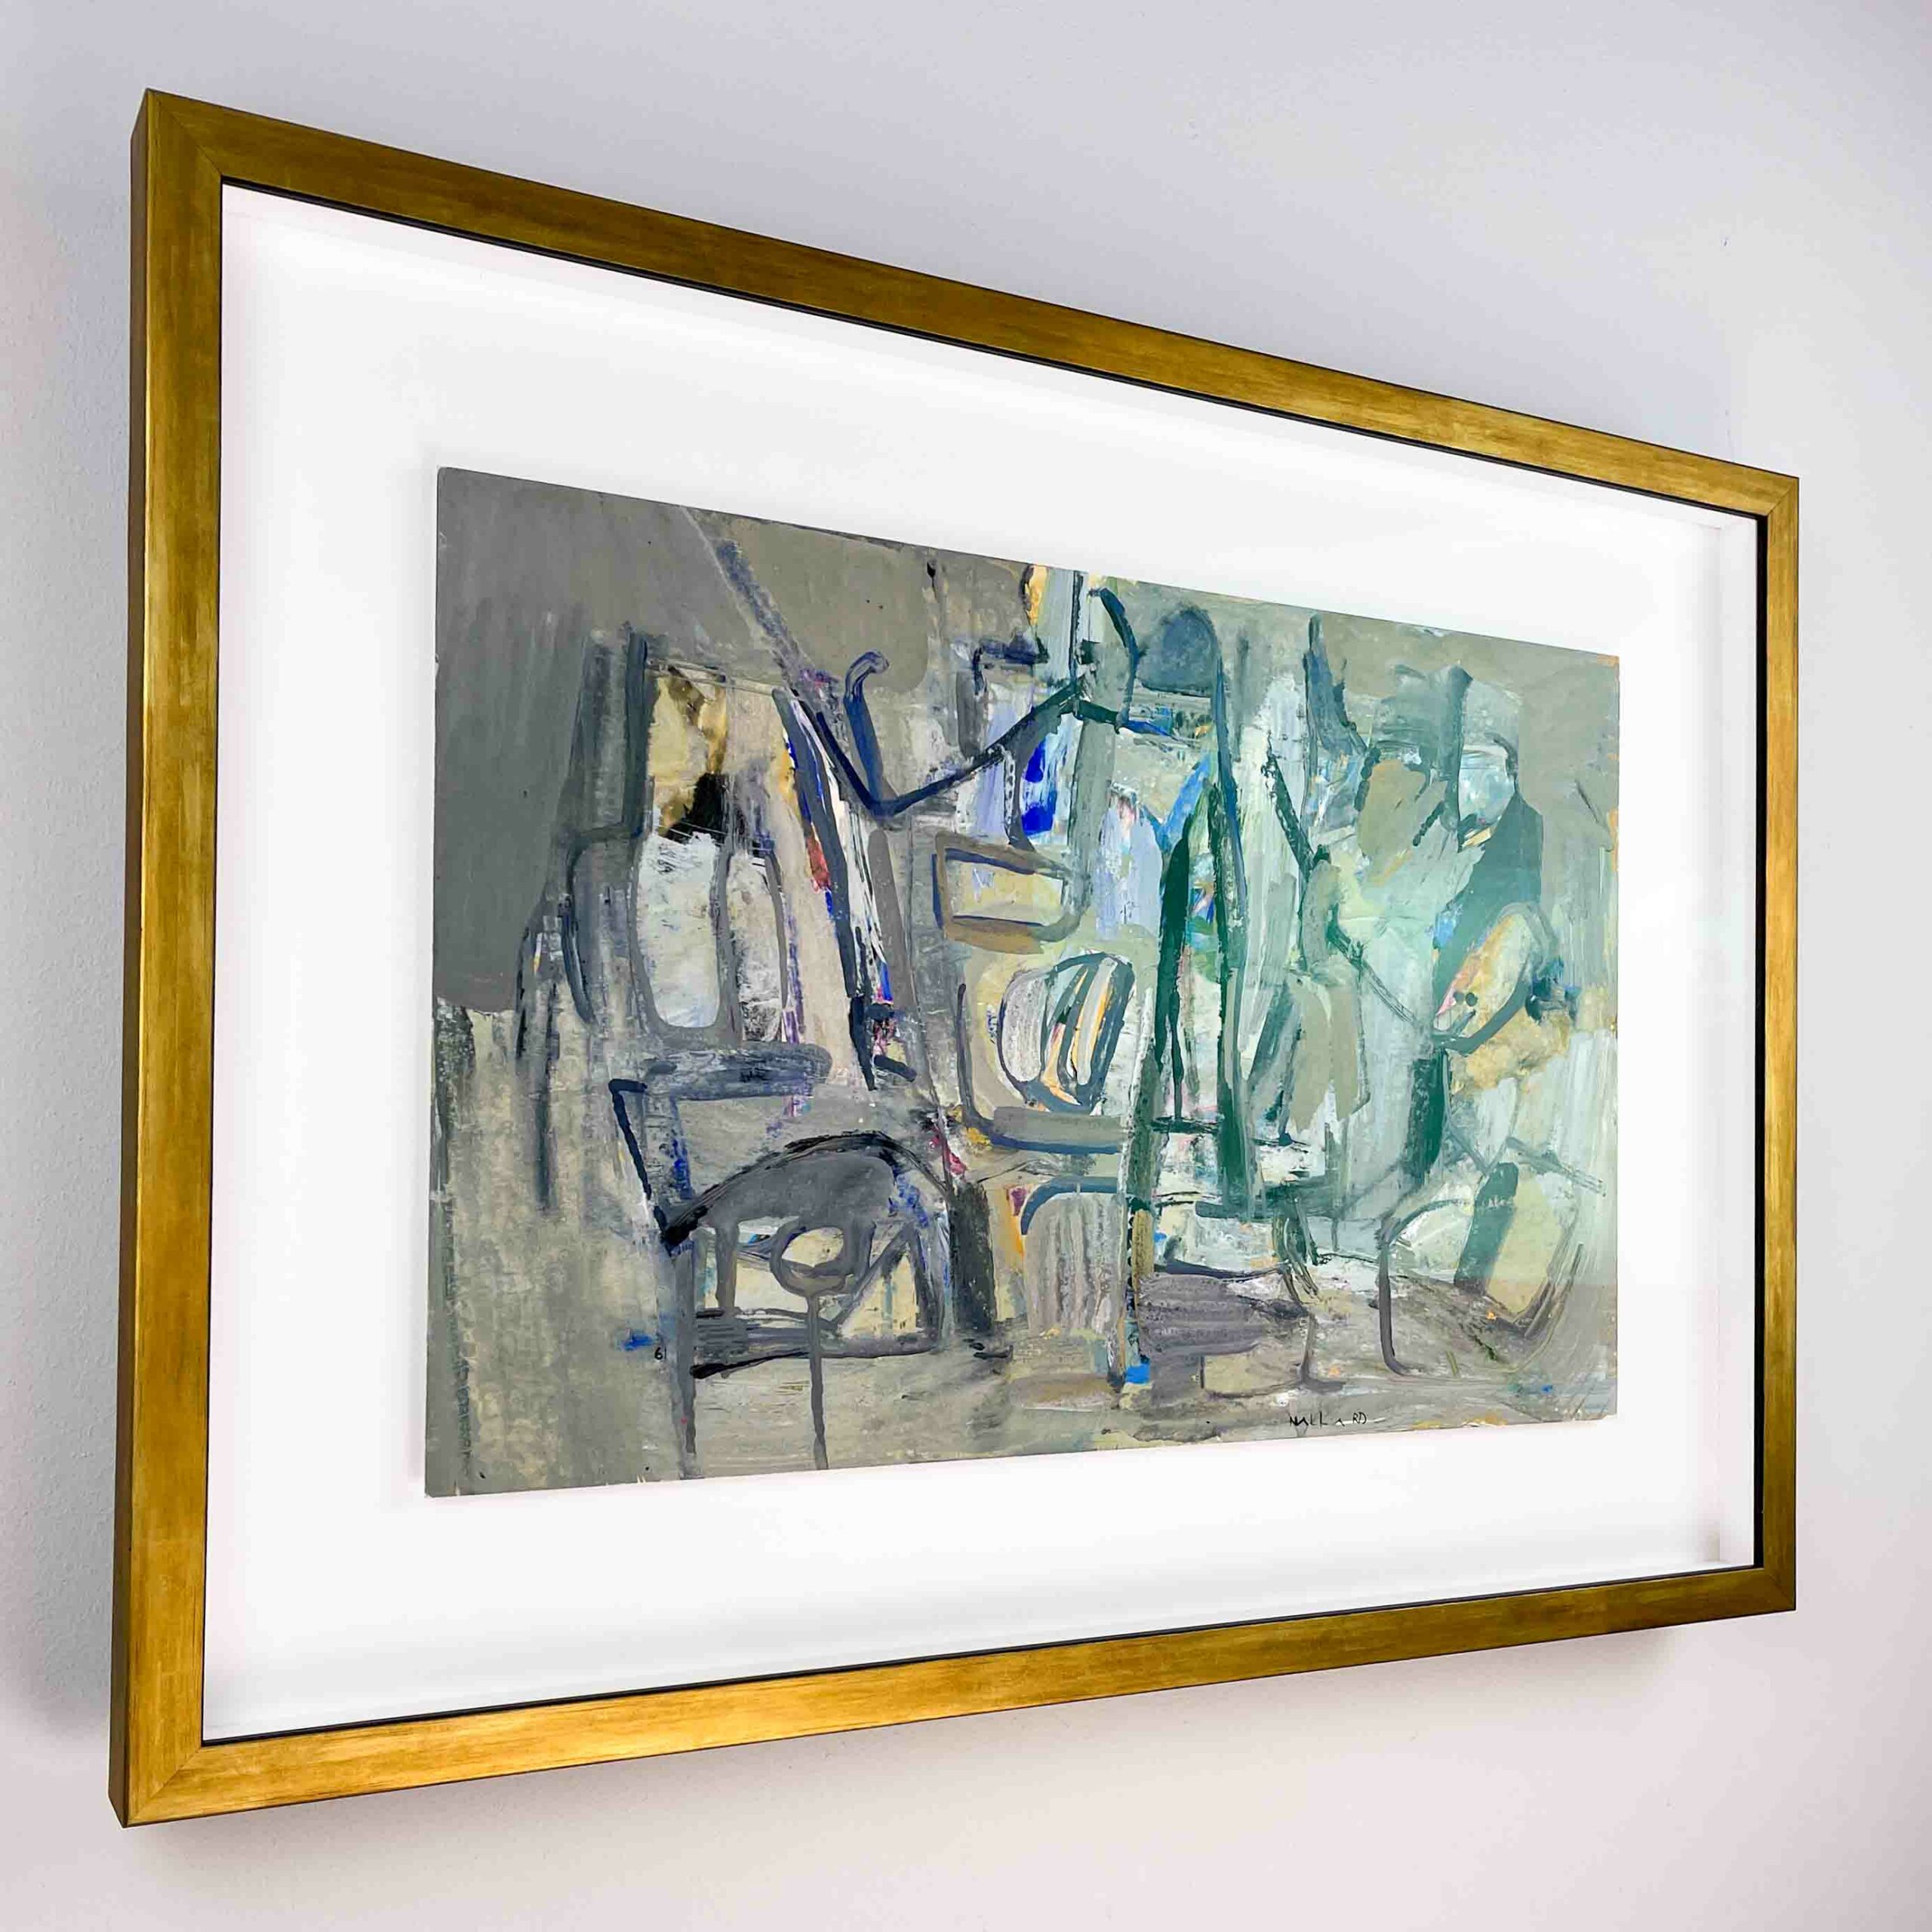 Louis Nallard, “Interior”, circa 1955 – oil on cardboard, professionally framed